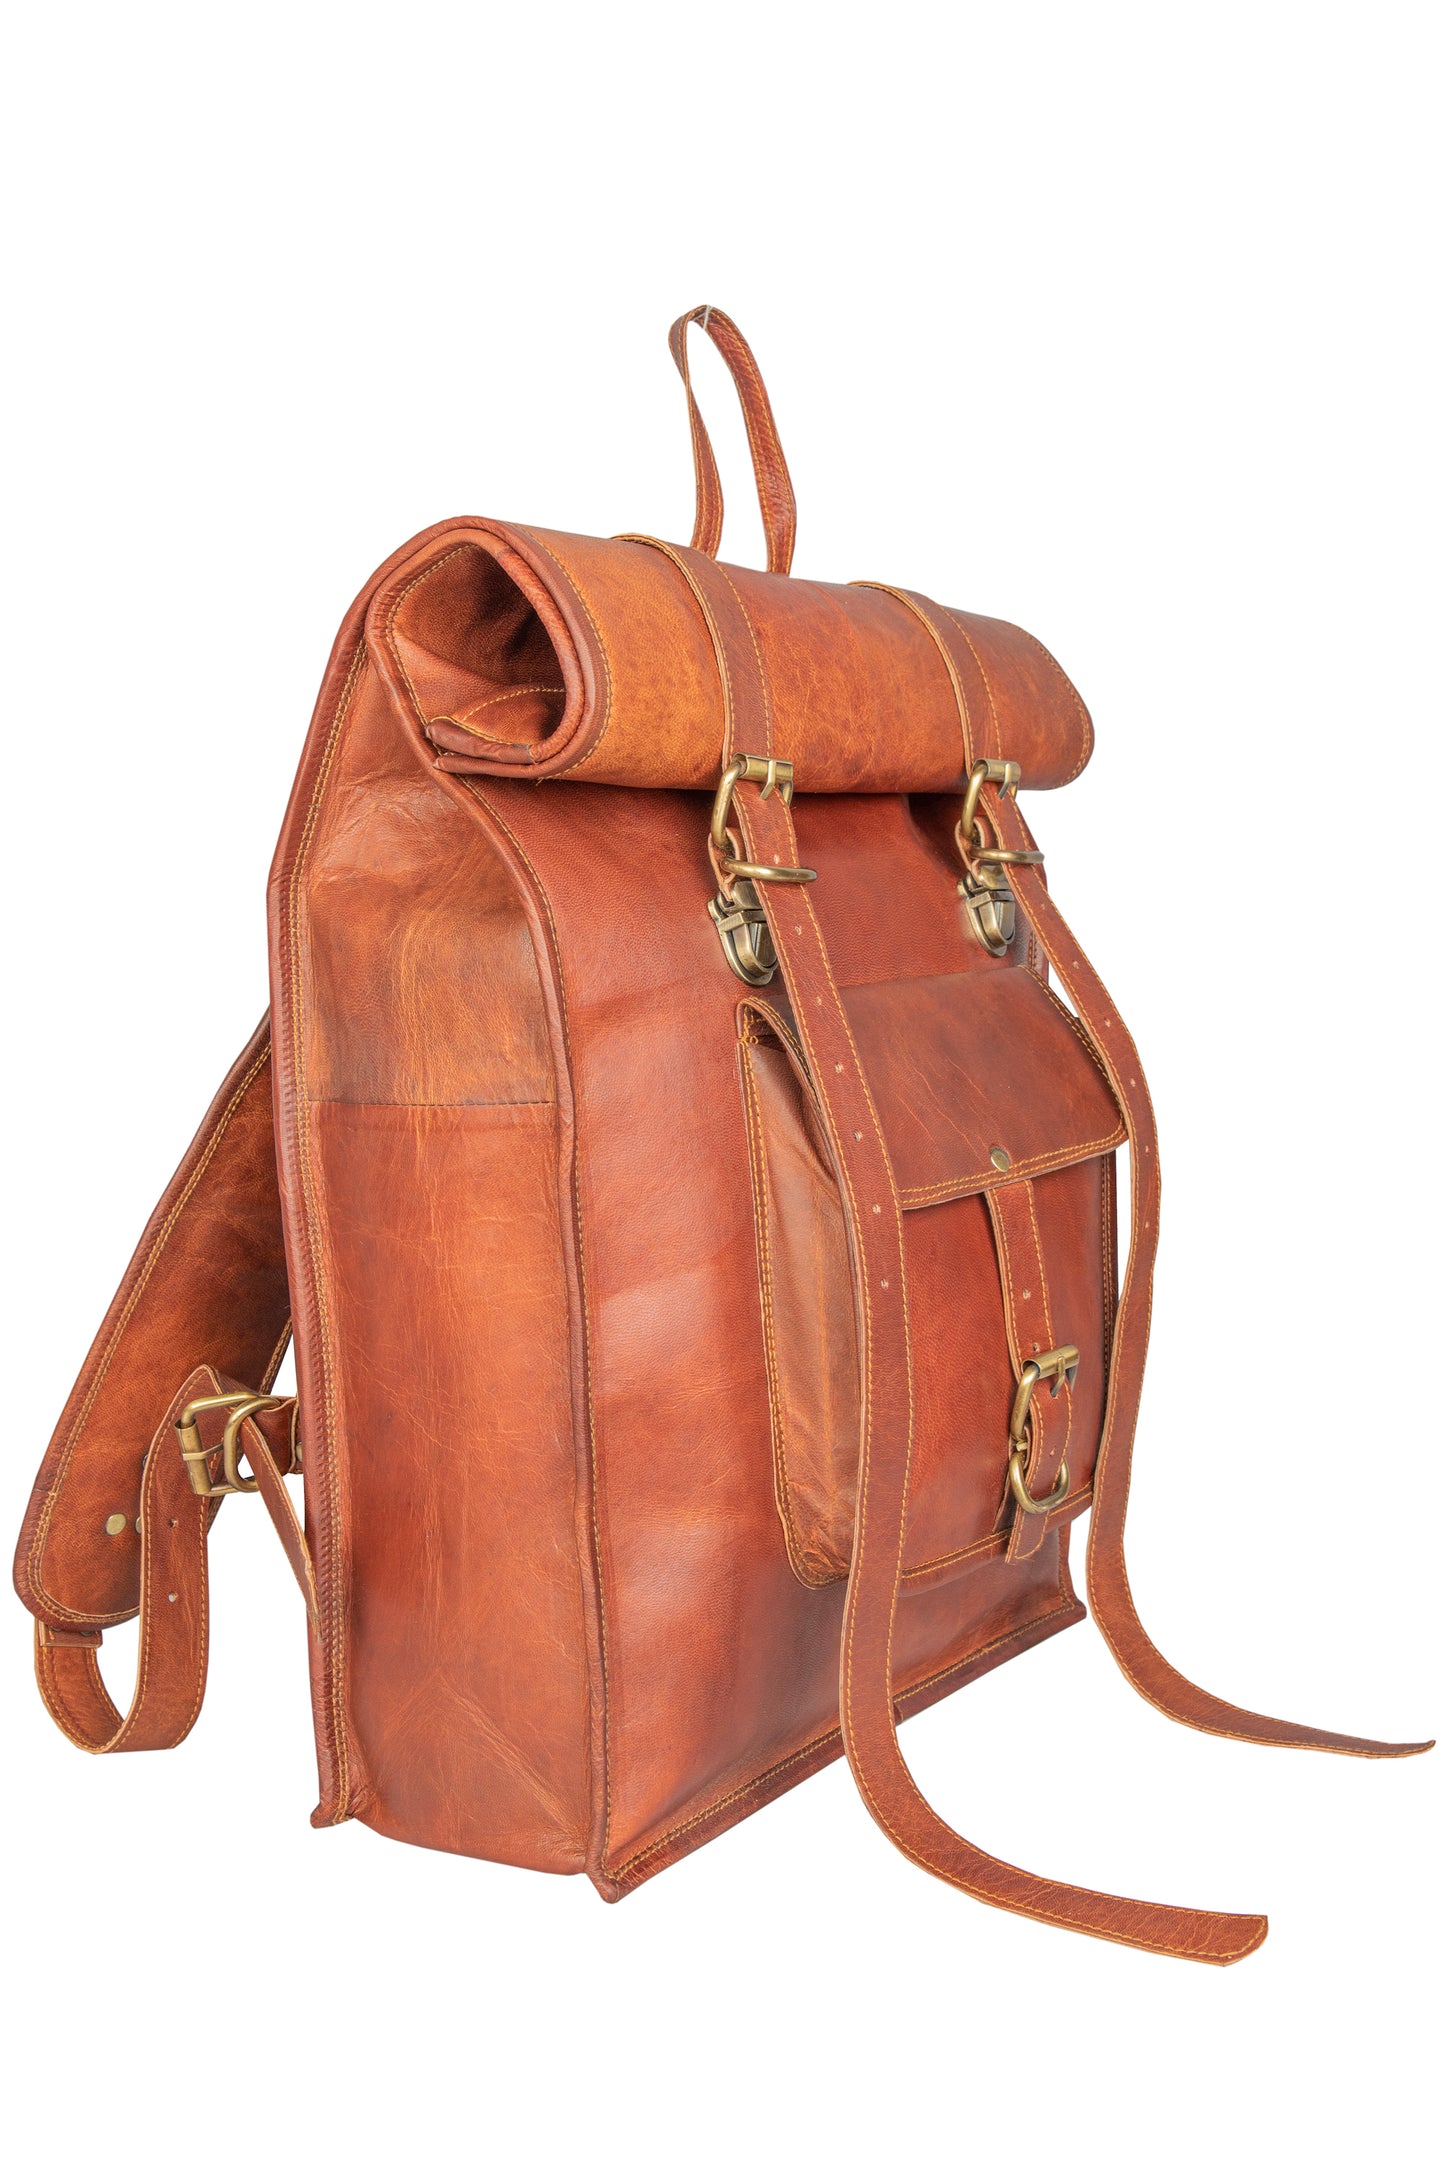 Retro Rucksack Rolling Backpack Bag .